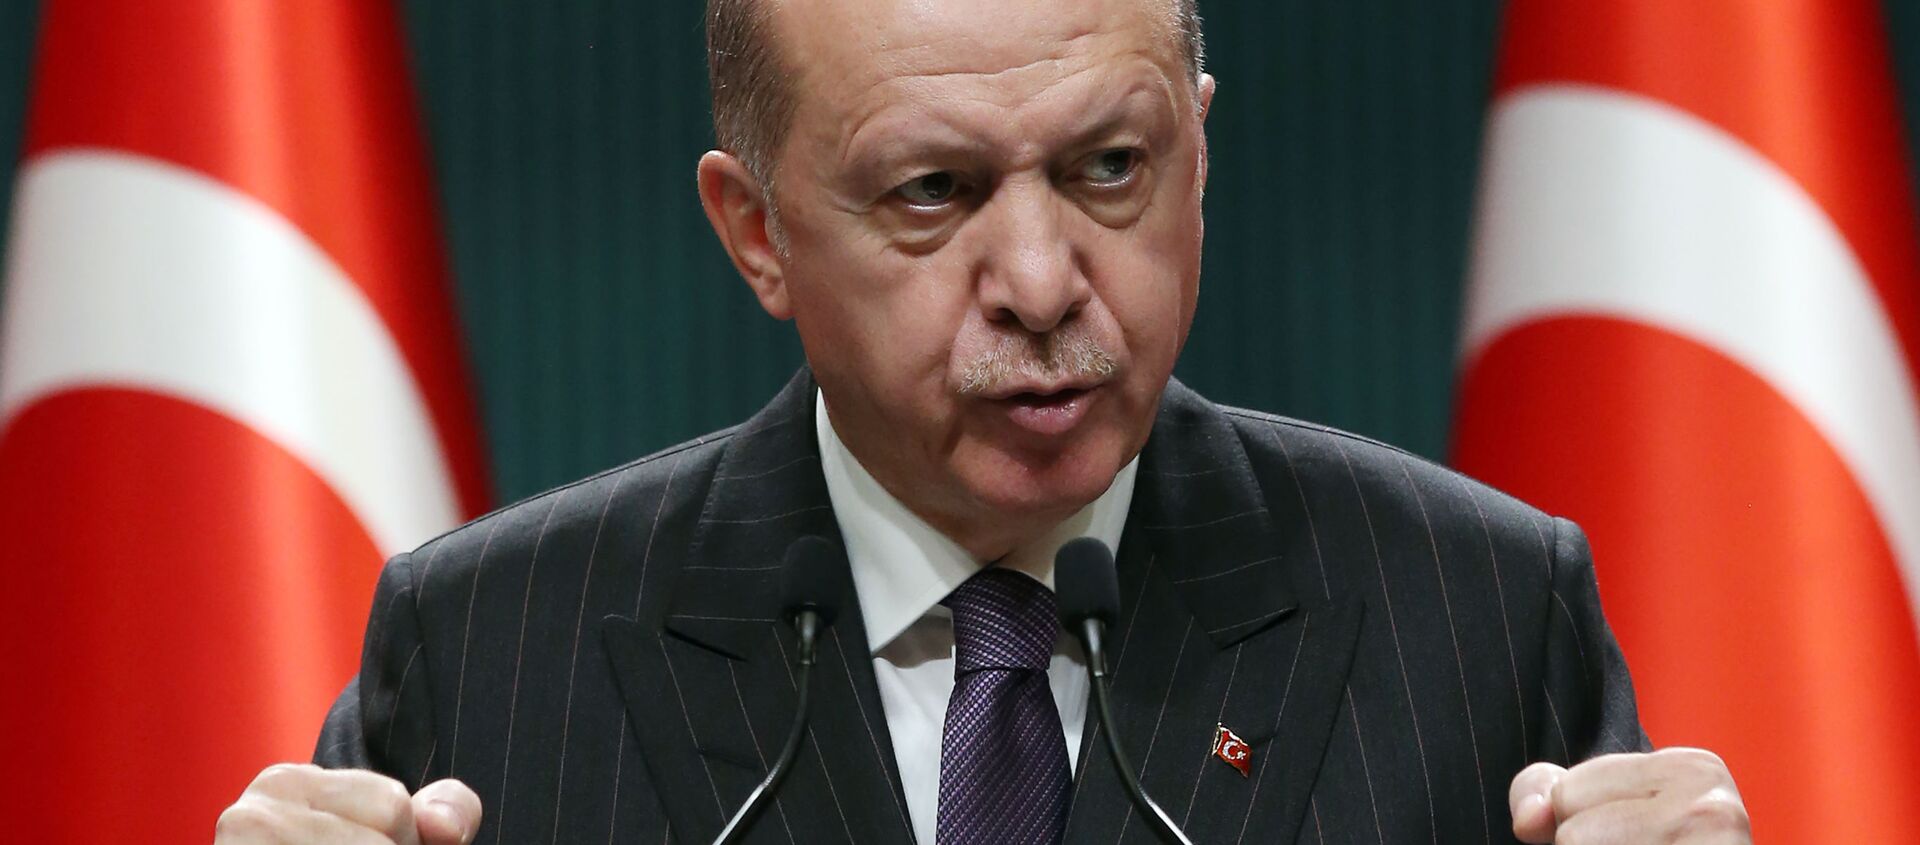 President of Turkey Recep Tayyip Erdogan makes a statement after chairing the cabinet meeting in Ankara, on December 14, 2020 - Sputnik International, 1920, 16.12.2020